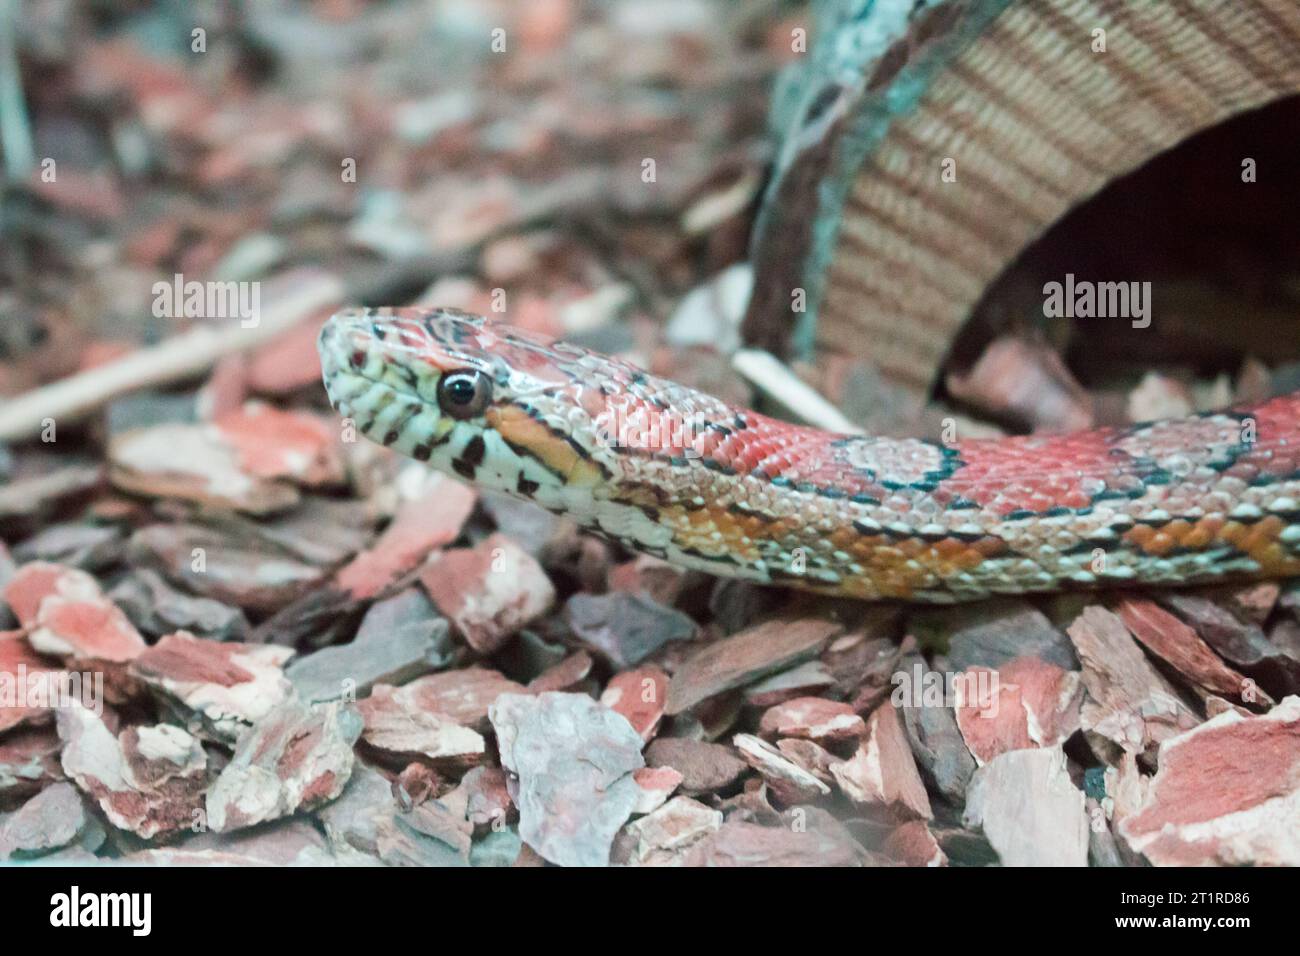 Corn snake (Pantherophis guttatus), a North American species of rat snake. Stock Photo